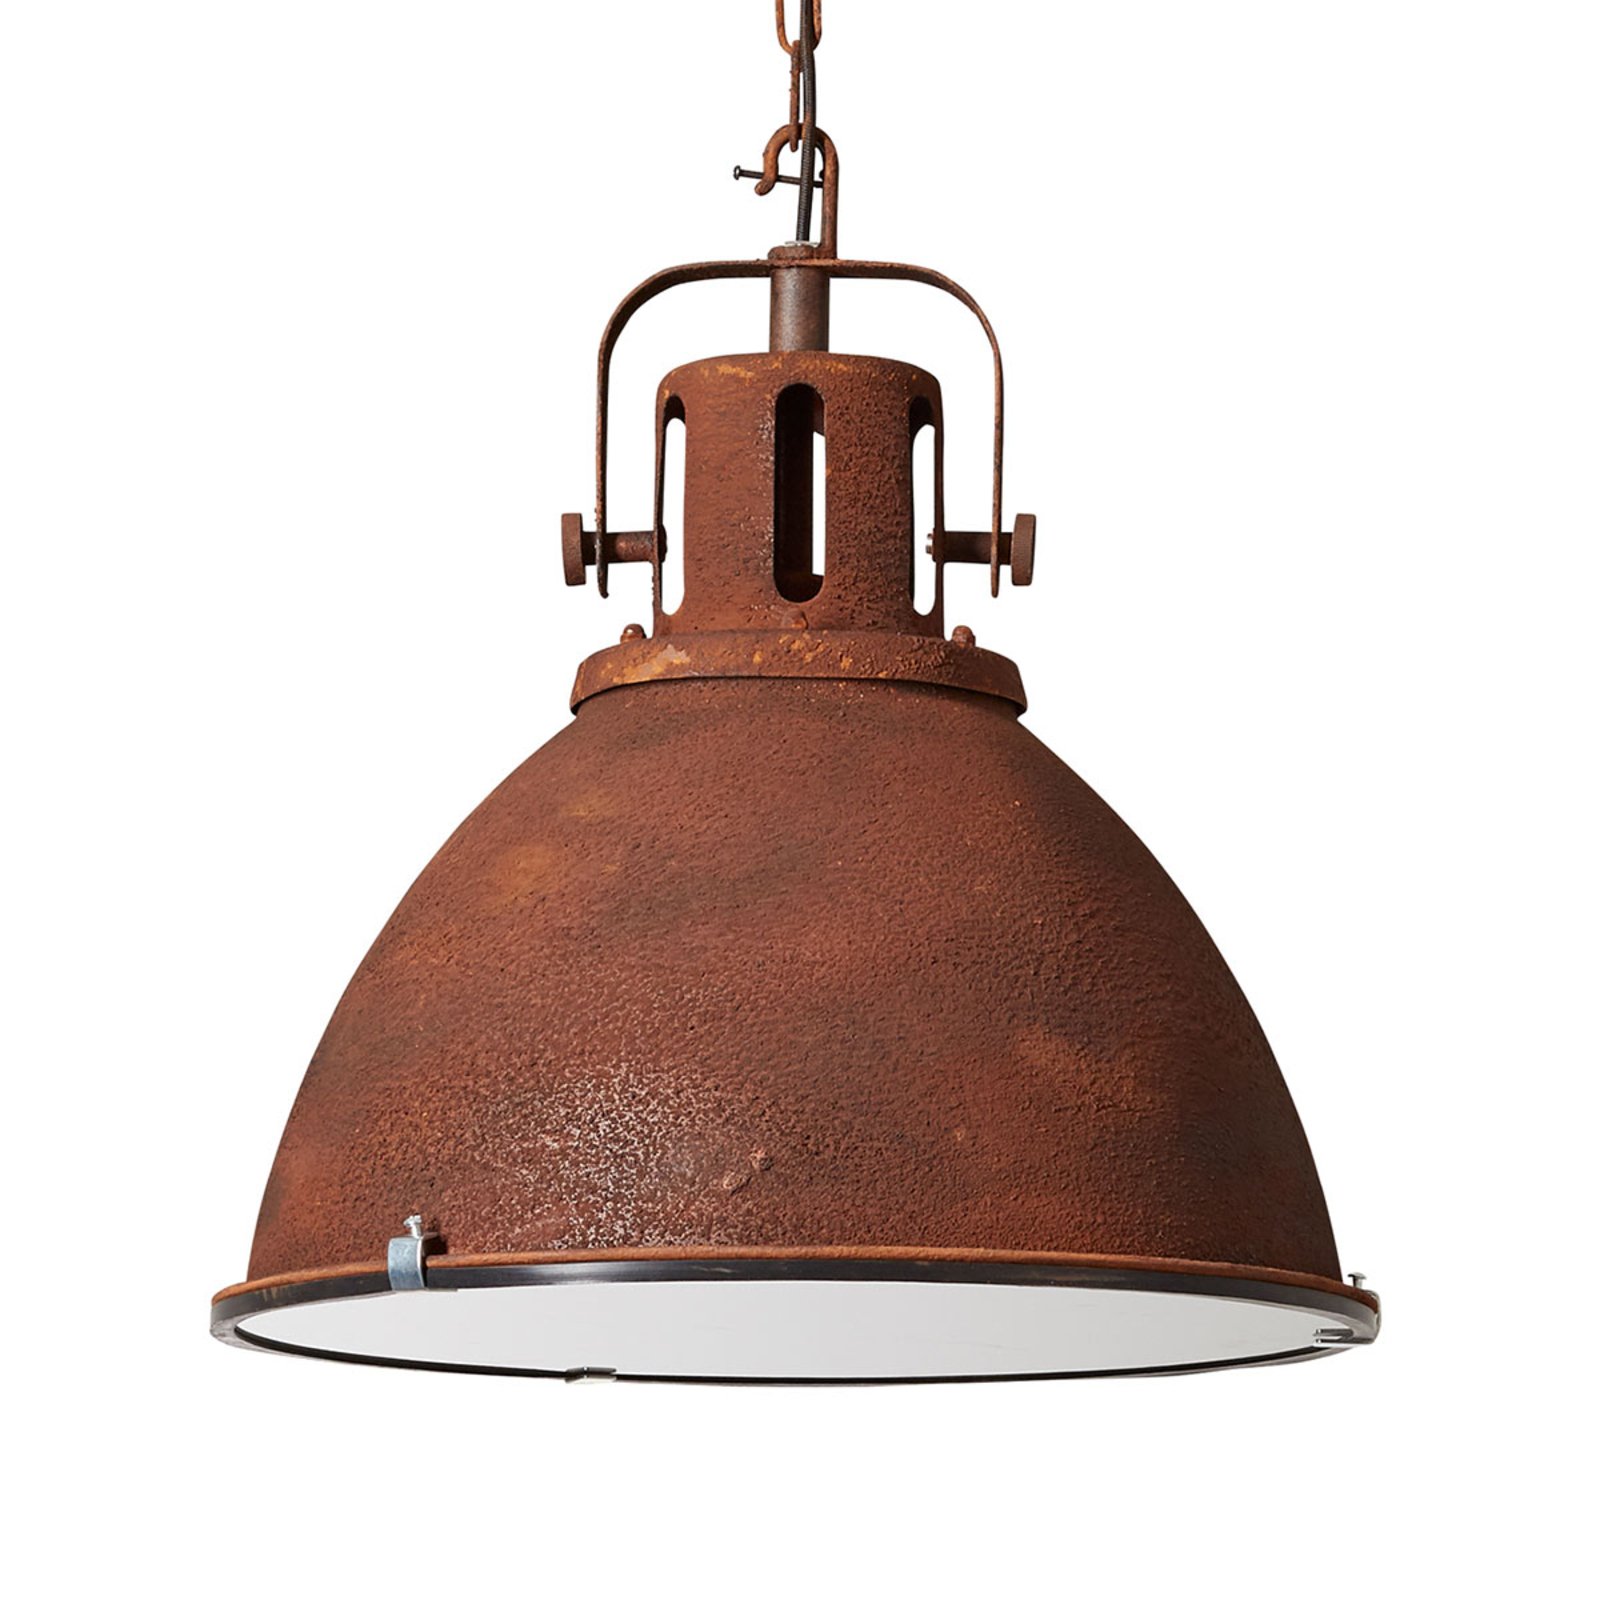 Hanglamp Jesper in industriële stijl